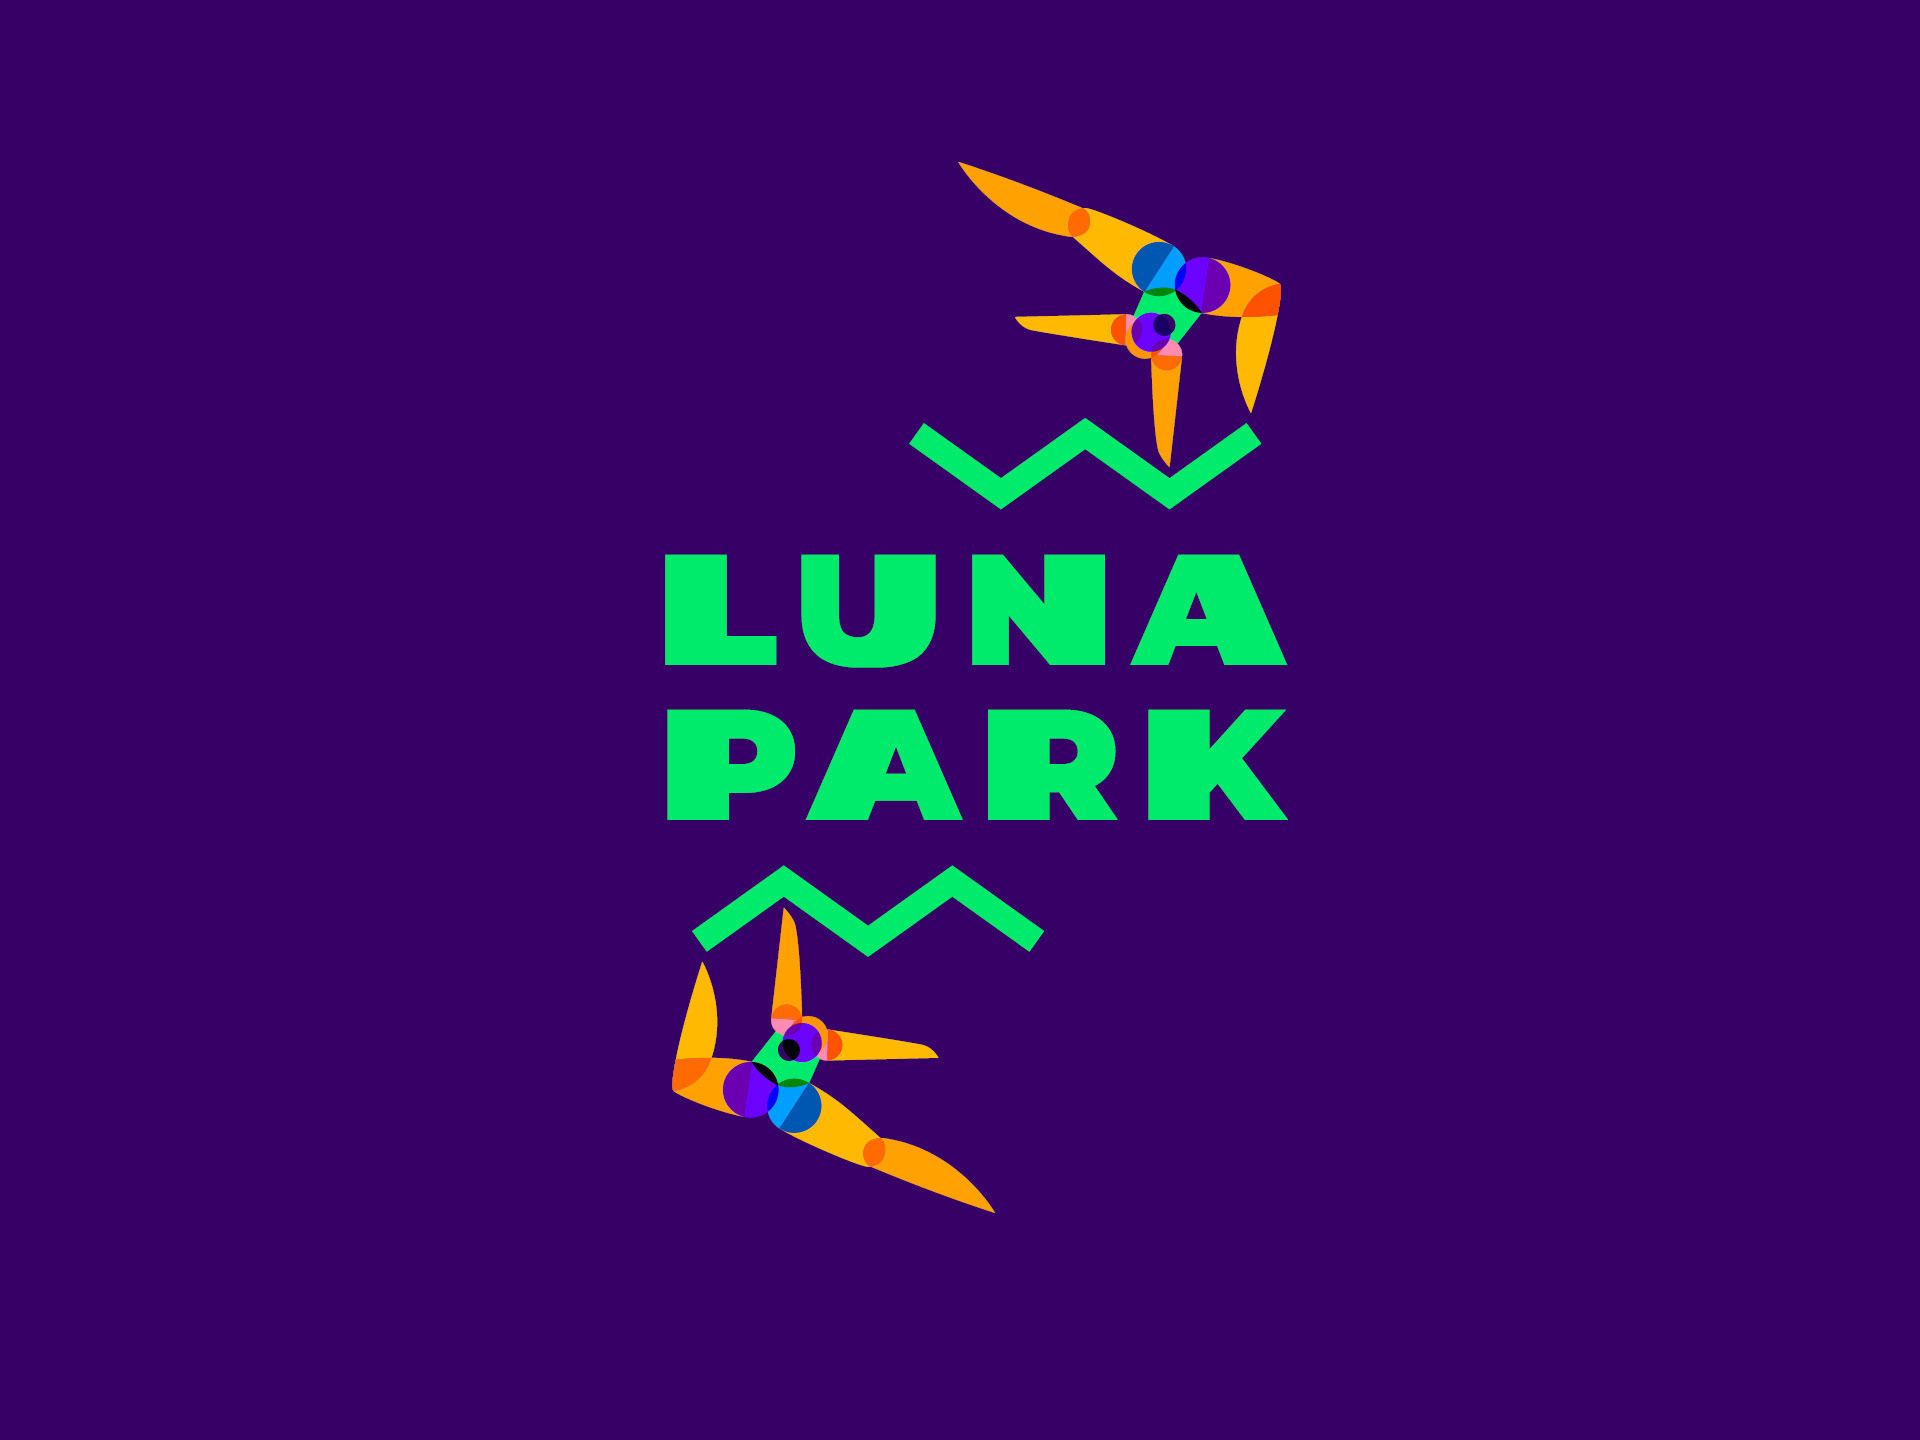 Lunapark visual identity